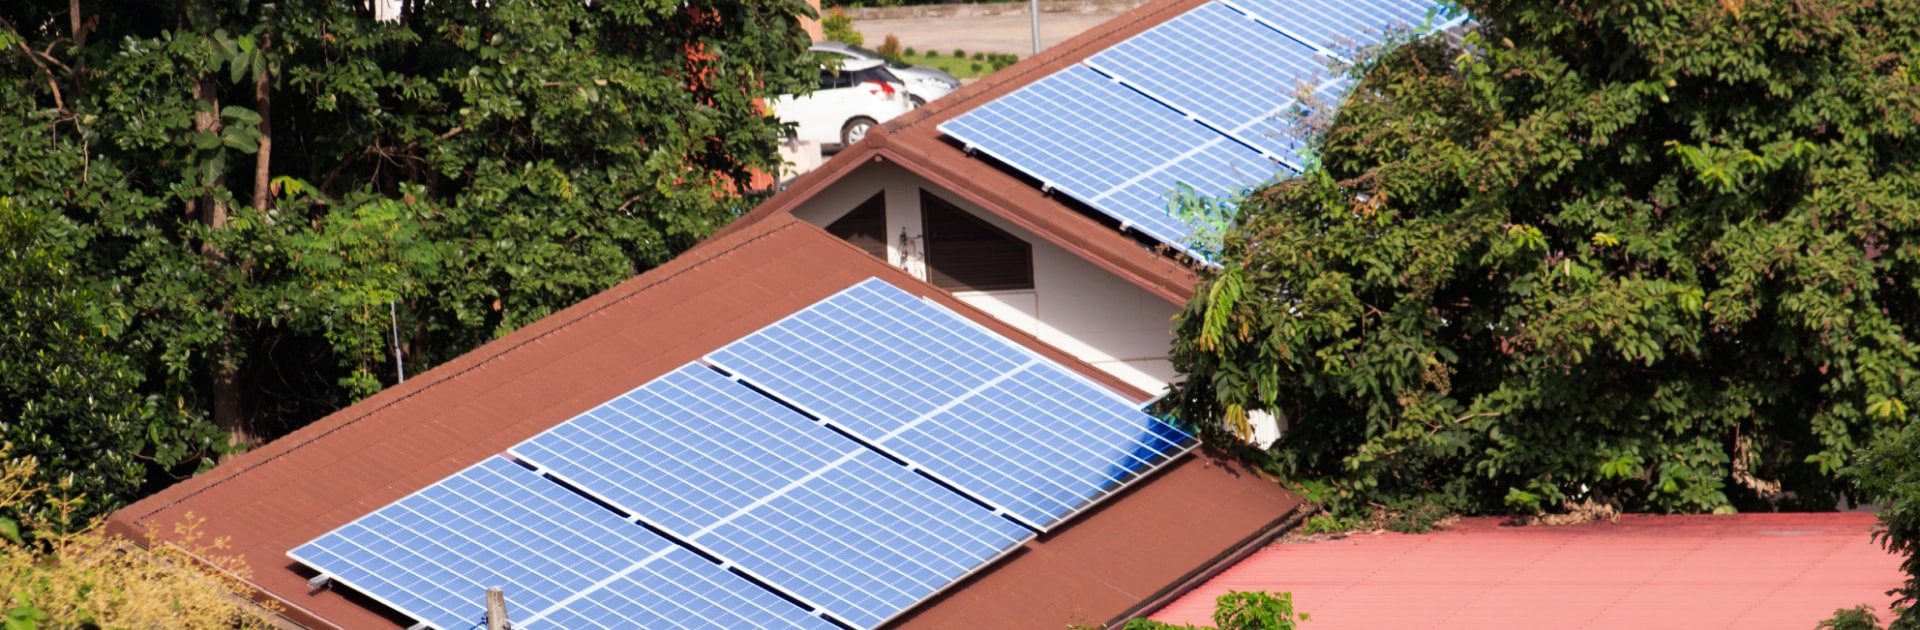 Solar panels on roof of suburban house